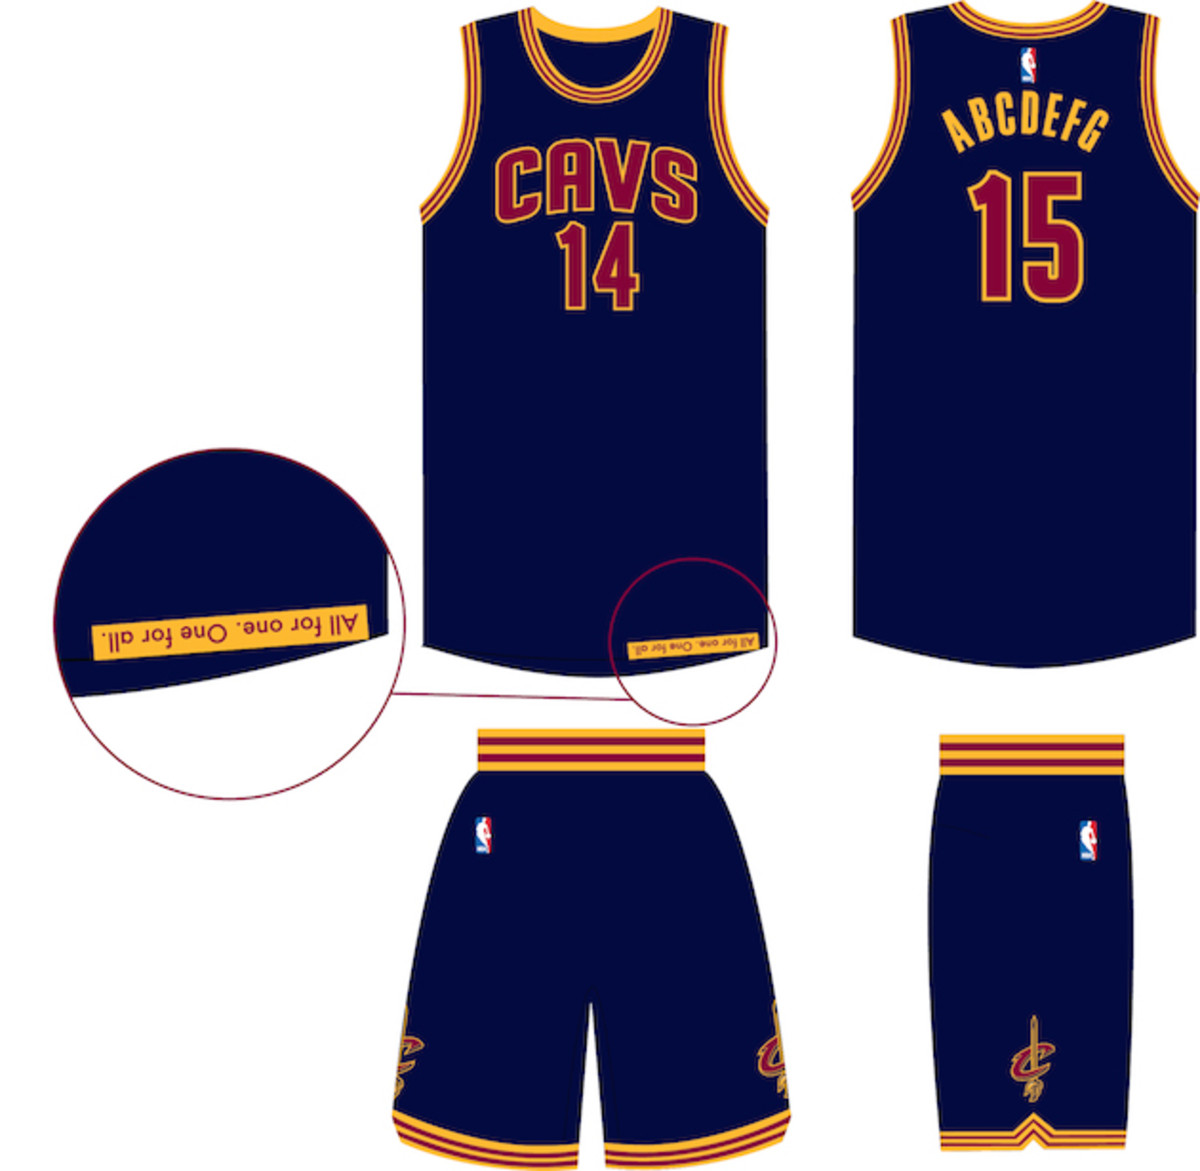 Cleveland Cavaliers' new uniform: Team reveals navy blue alternate - Sports  Illustrated